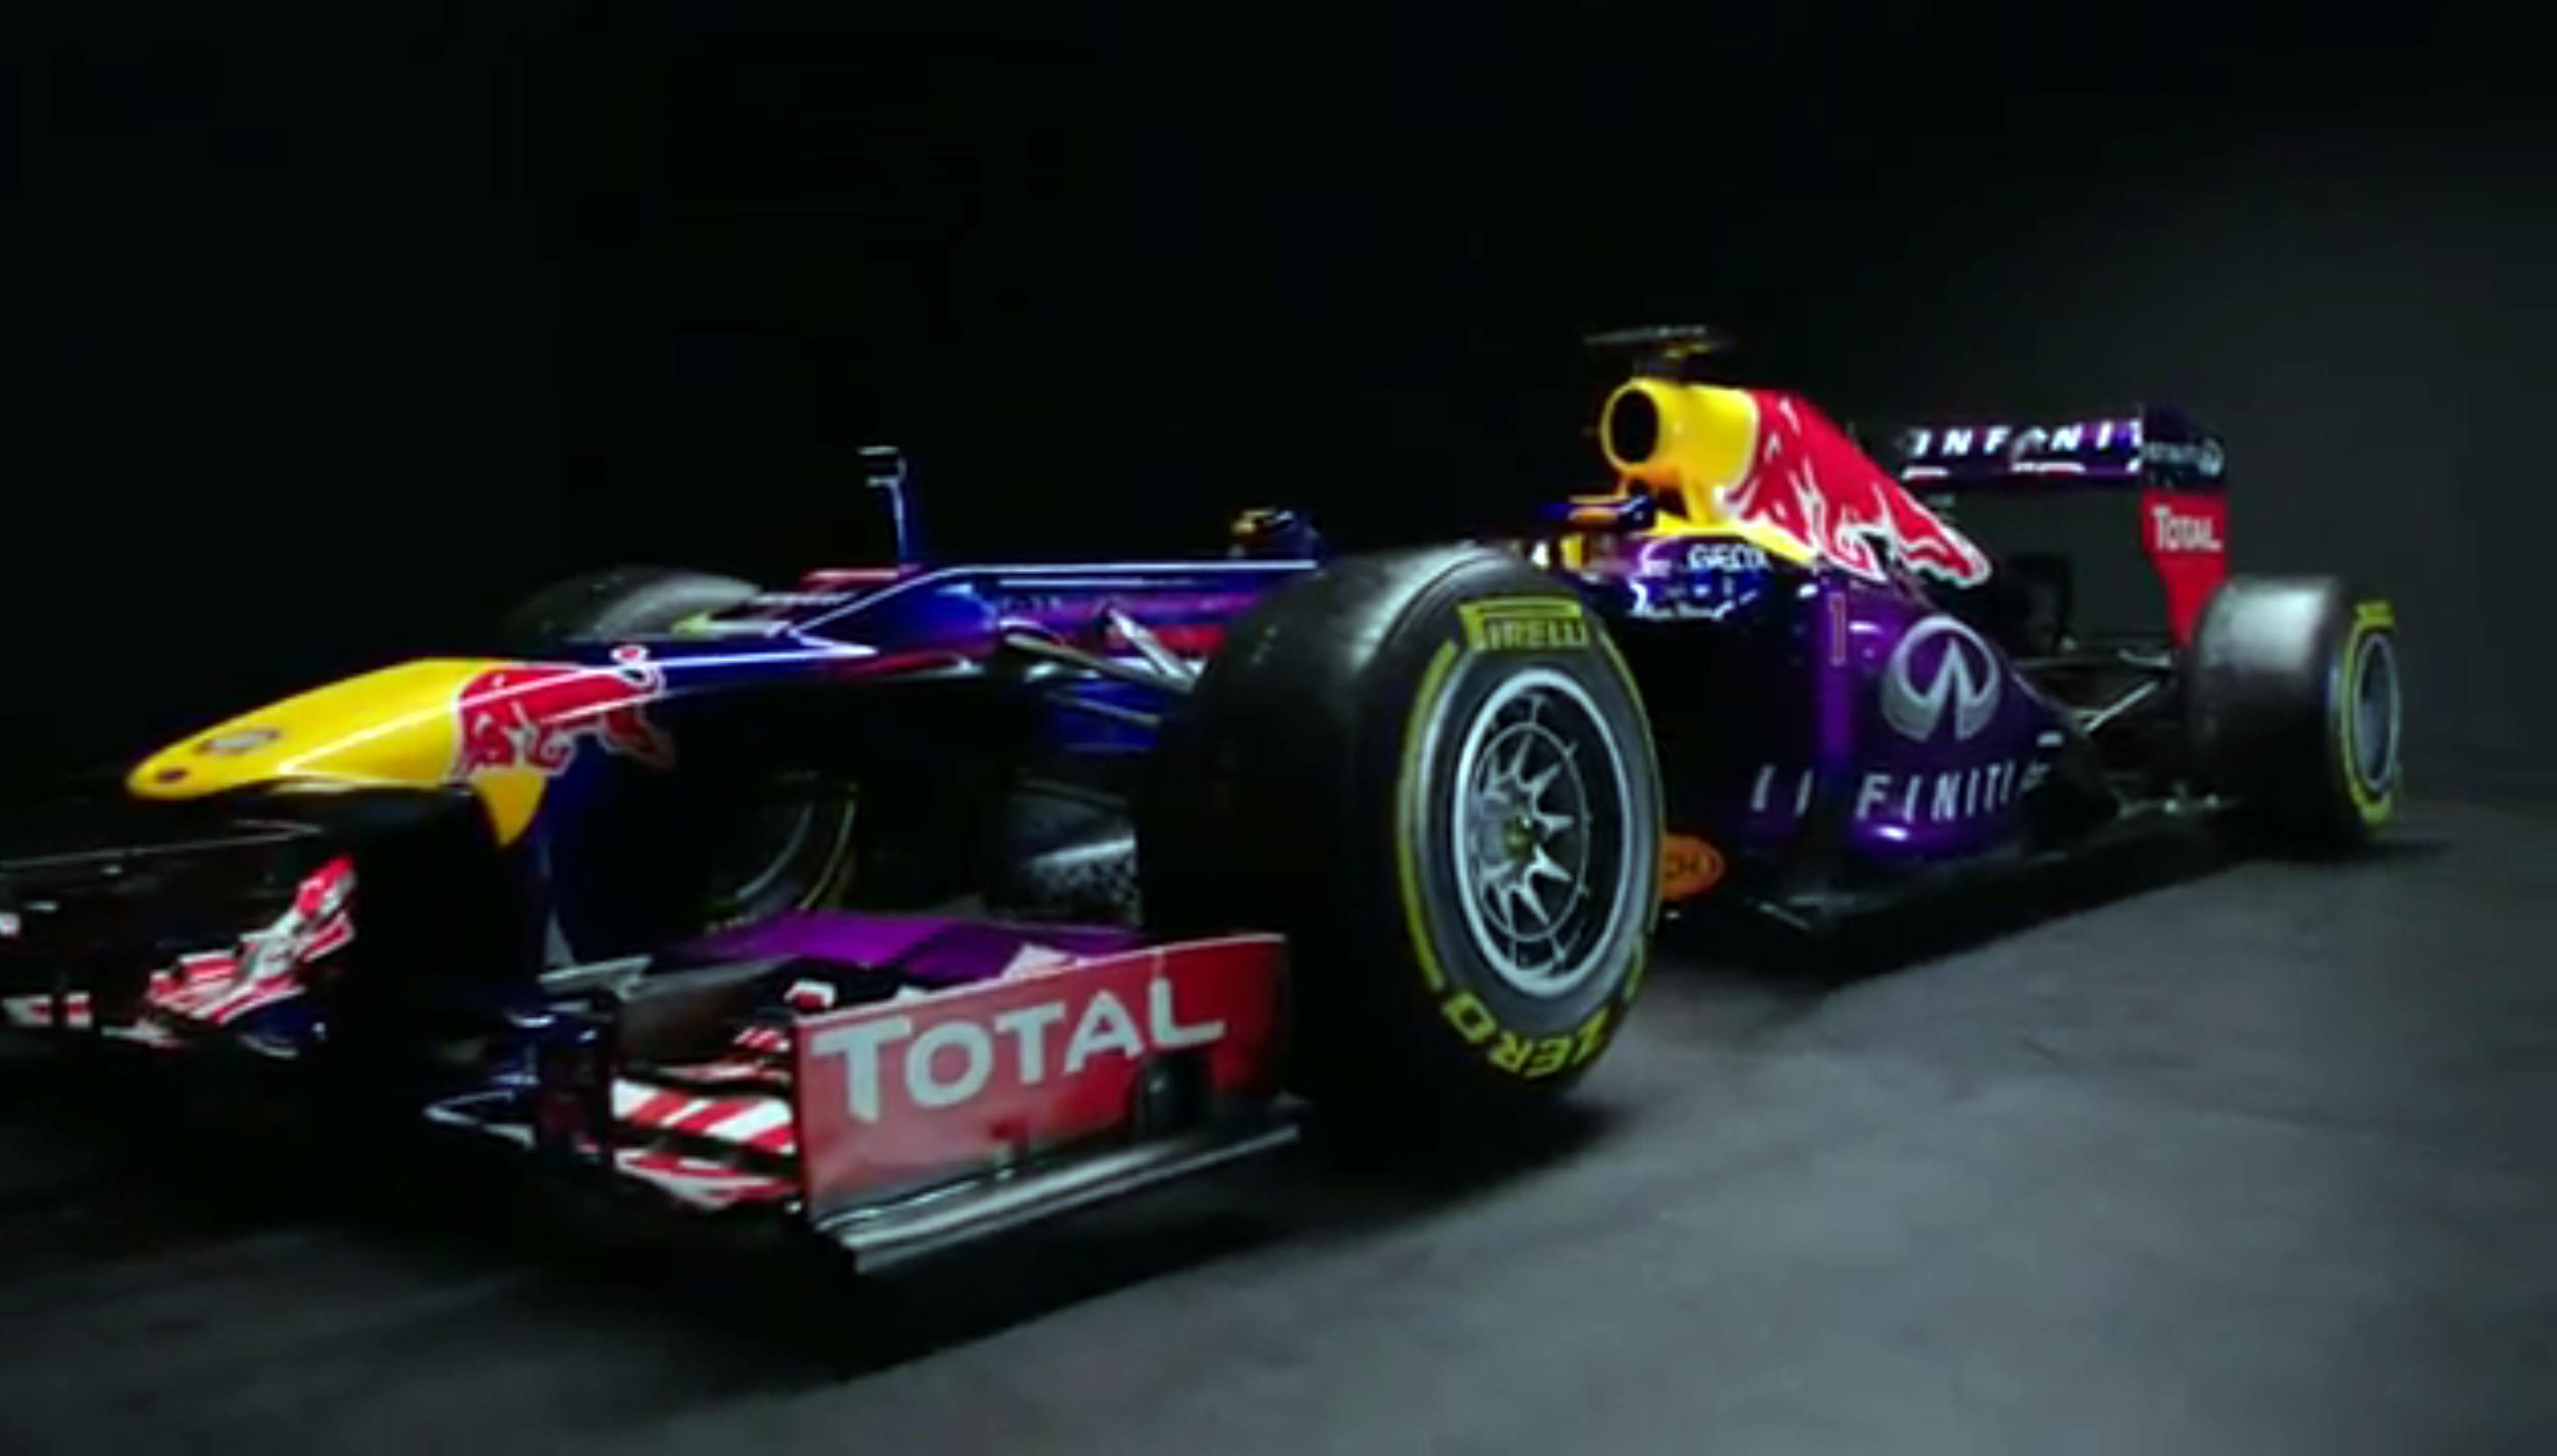 Red Bull F1 Wallpaper